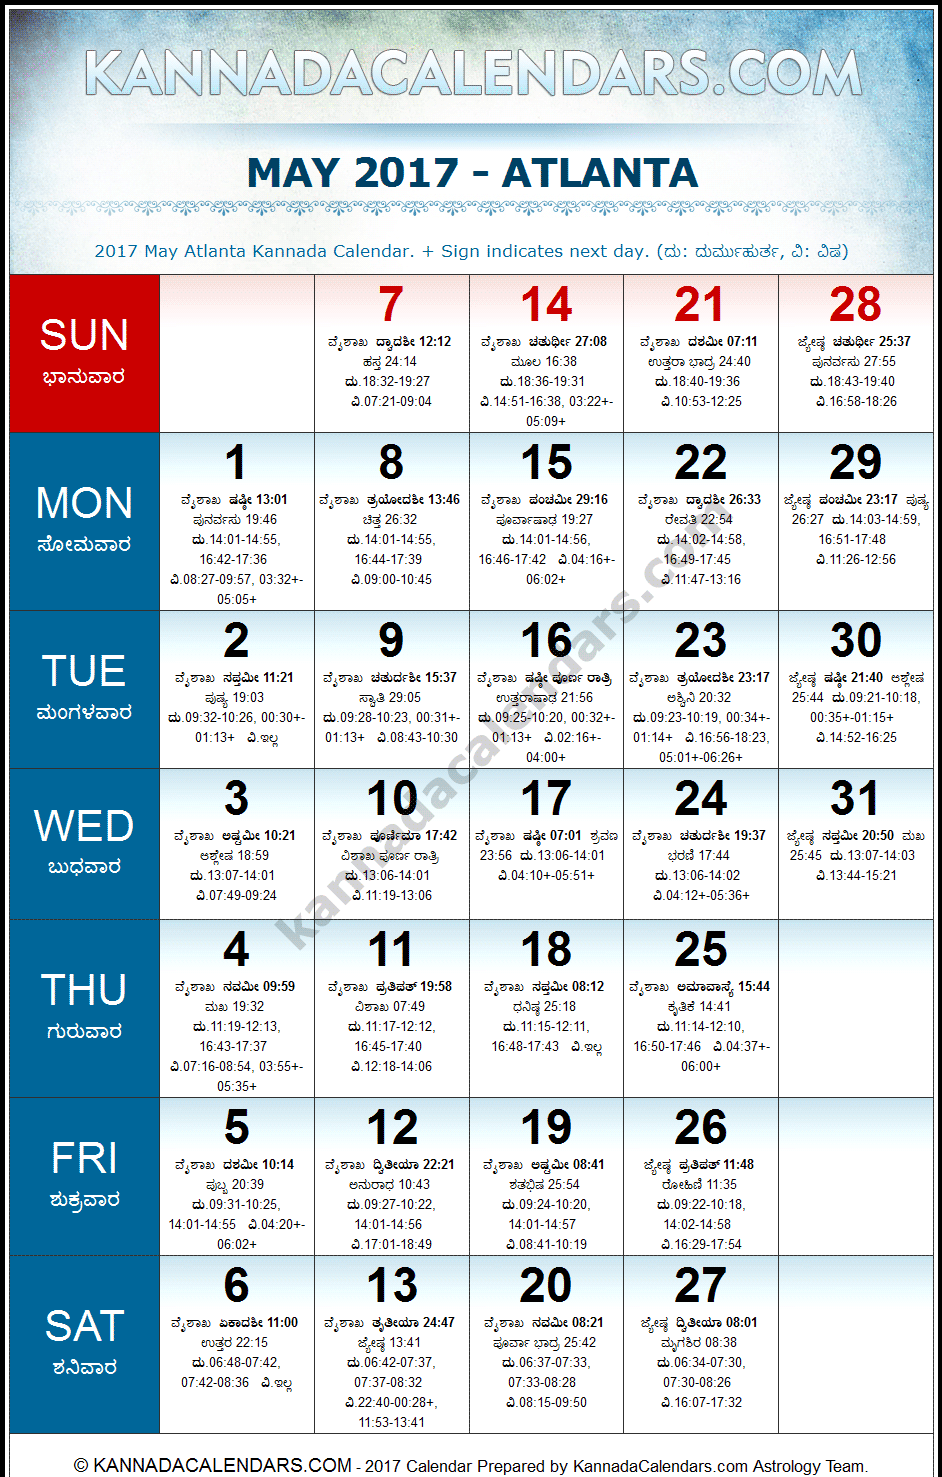 May 2017 Kannada Calendar for Atlanta, USA